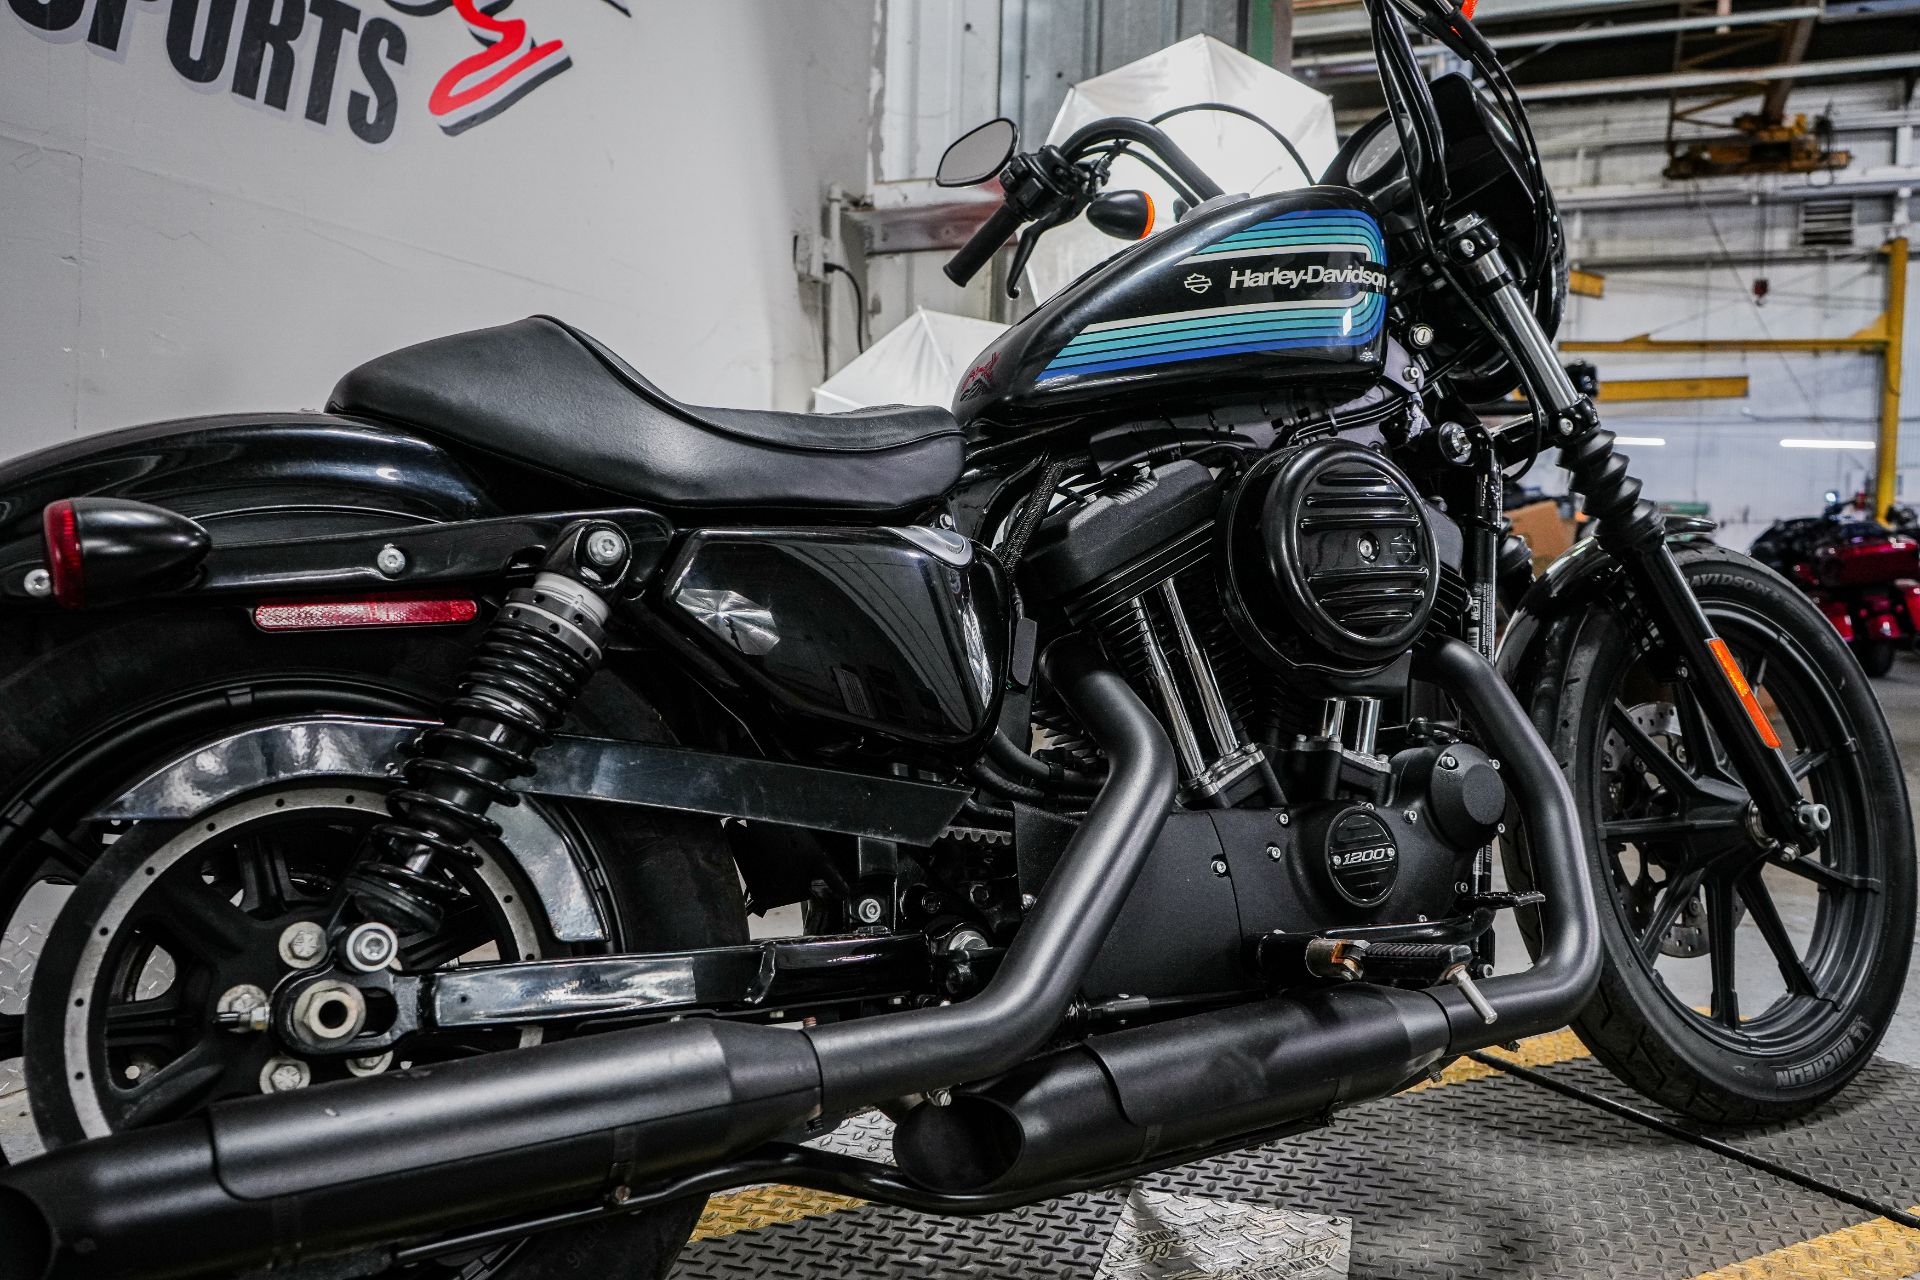 2018 Harley-Davidson Iron 1200™ in Sacramento, California - Photo 8